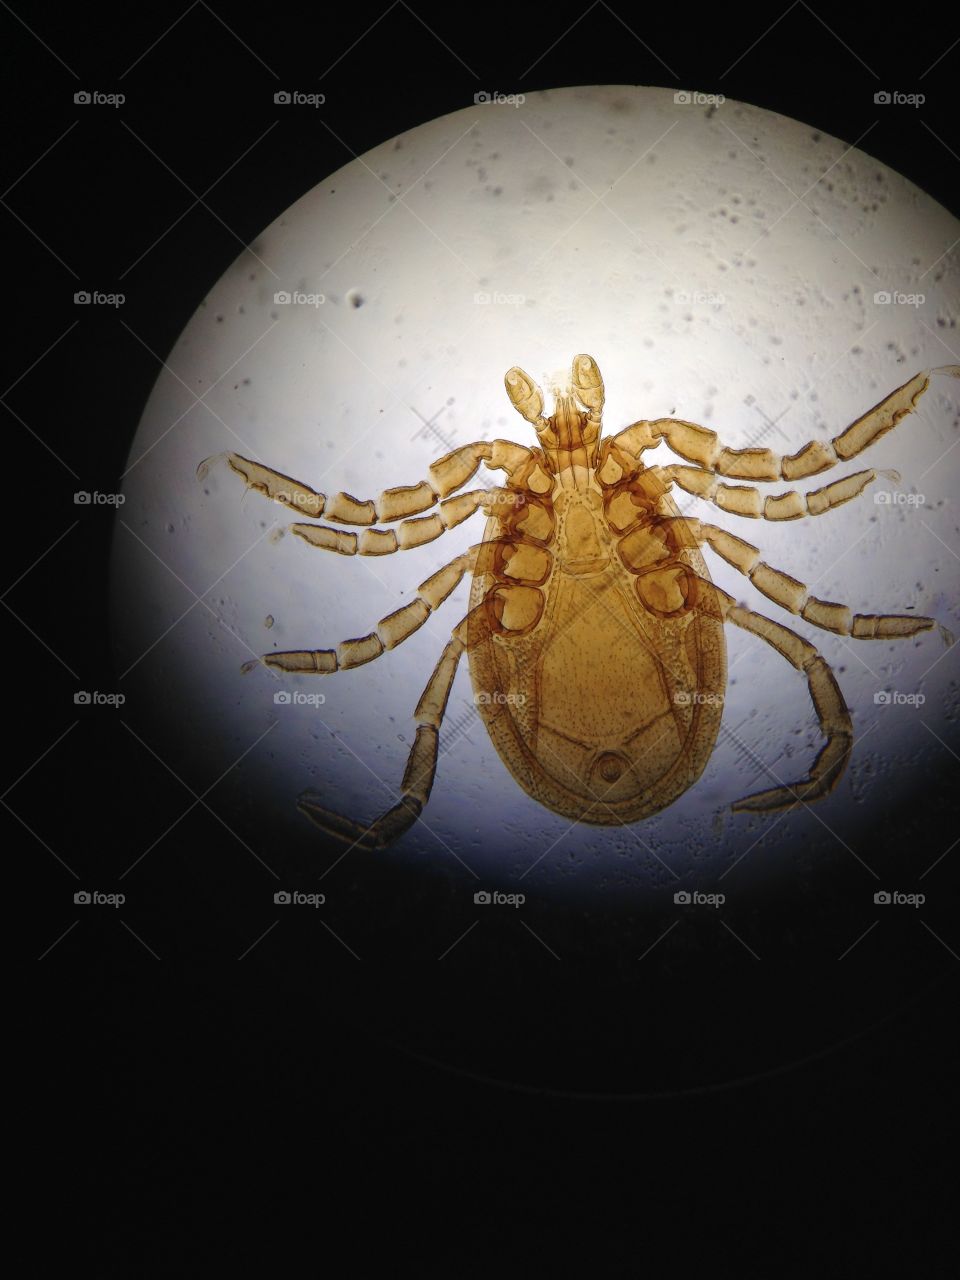 Ixodes (tick) male under microscope